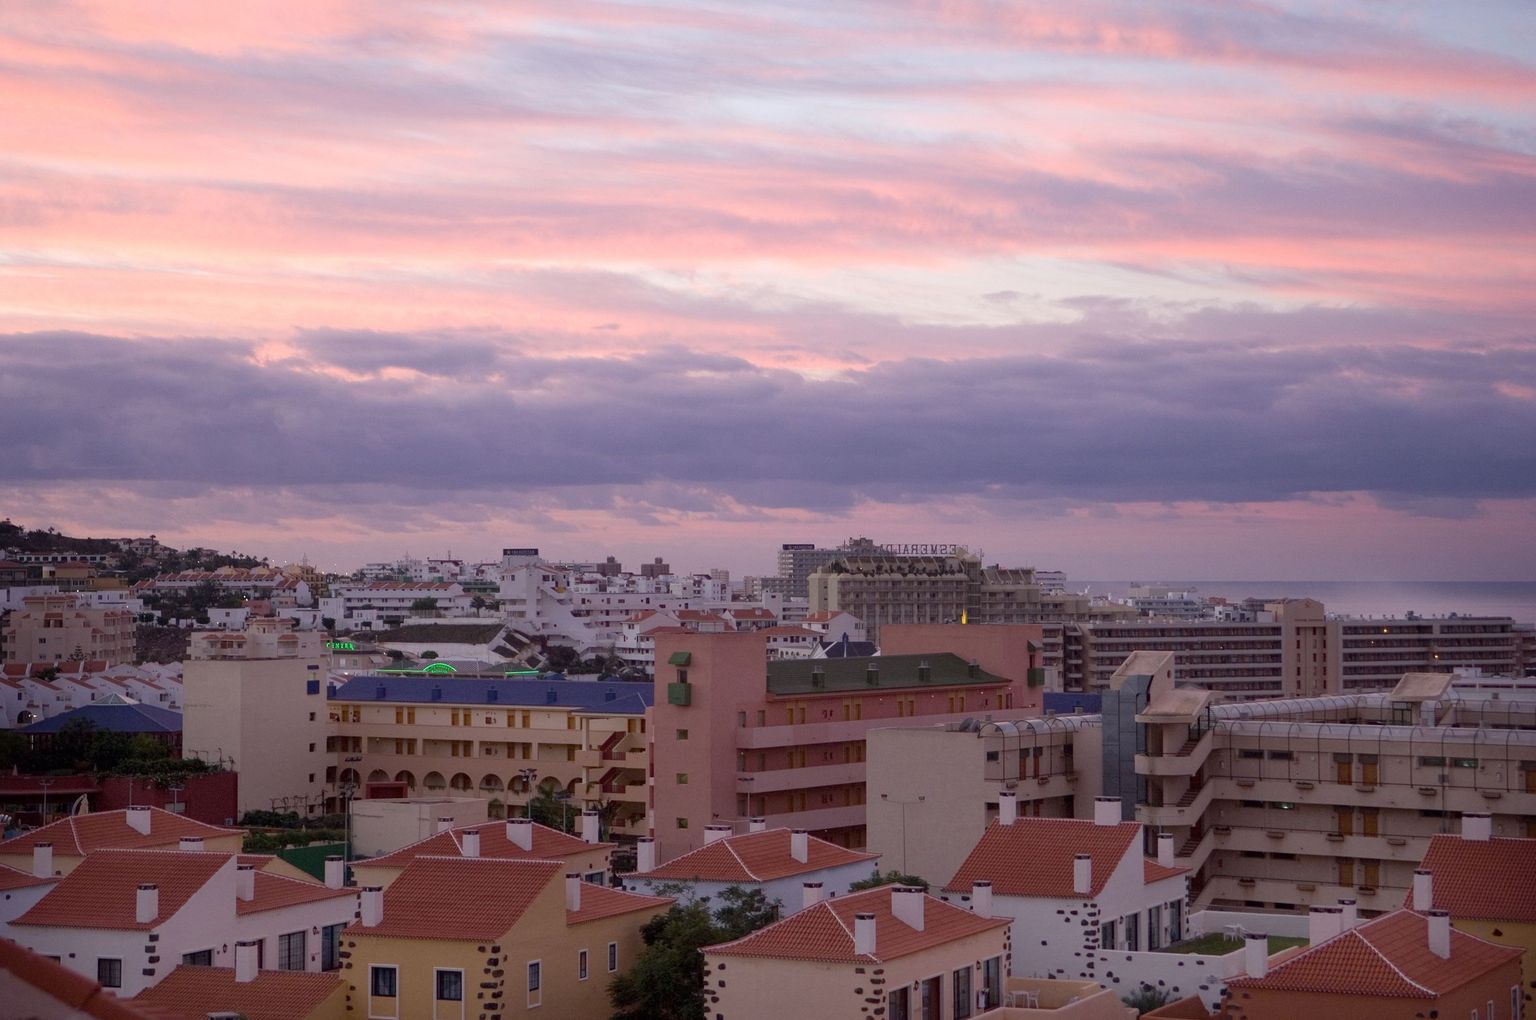 Недвижимость за рубежом из критерия успеха превращается в обузу. На фото: вид на Тенерифе, Испания.